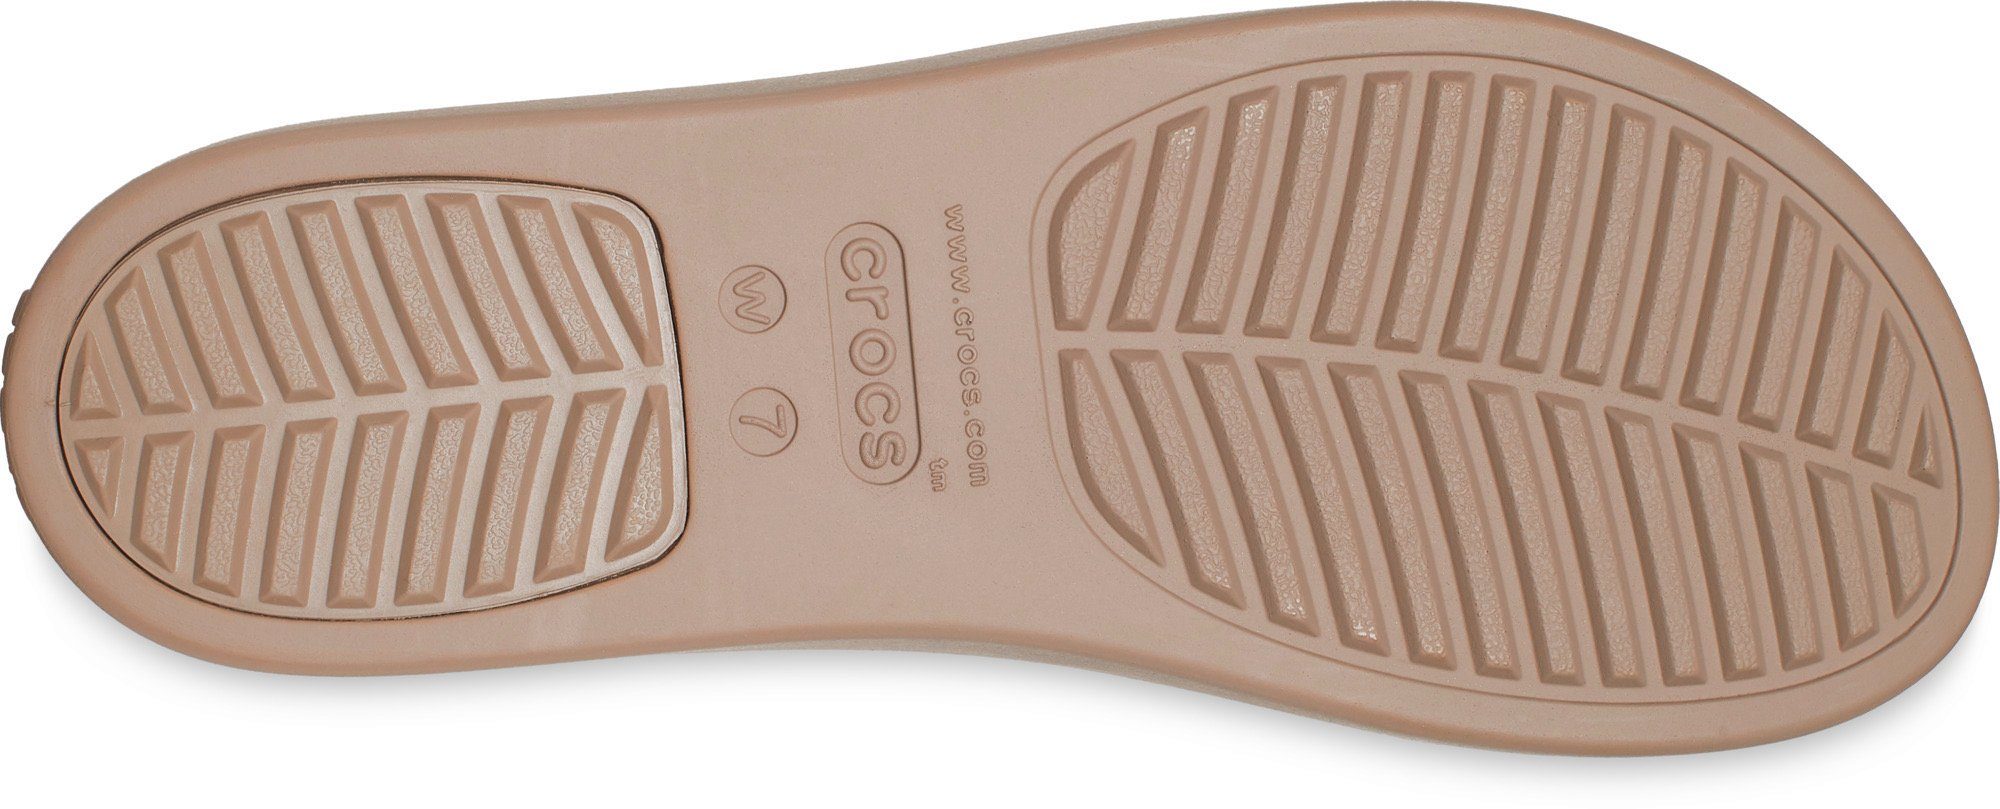 Schuhe Sandaletten Crocs Brooklyn Low Wedge W Keilsandalette mit verstellbarem Fersenriemchen